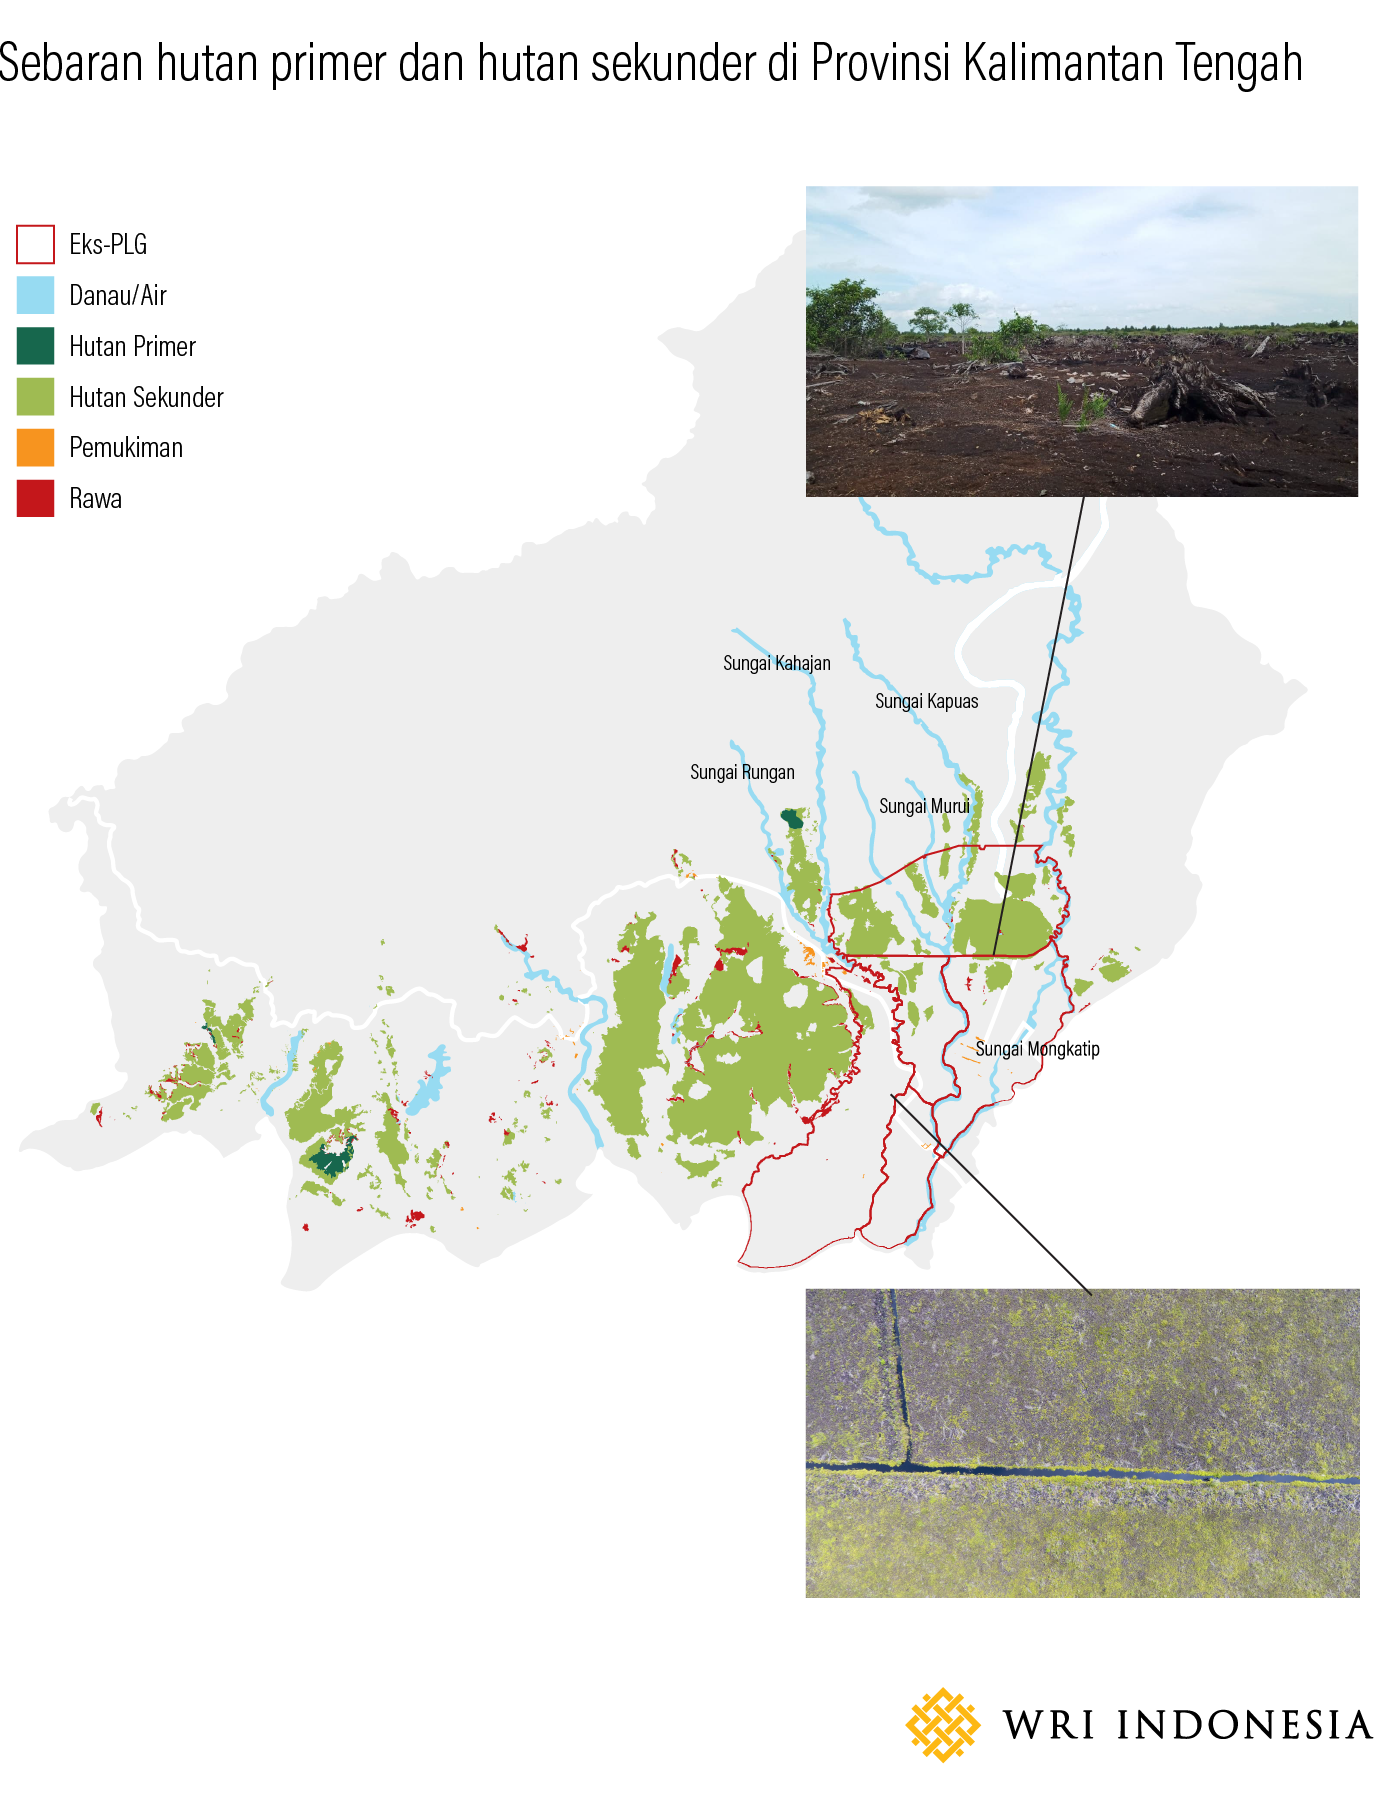 Sebaran Hutan Primer dan Hutan Sekunder di Provinsi Kalimantan Tengah. Sumber: Kementrian Lingkungan Hidup dan Kehutanan (KLHK, 2019)